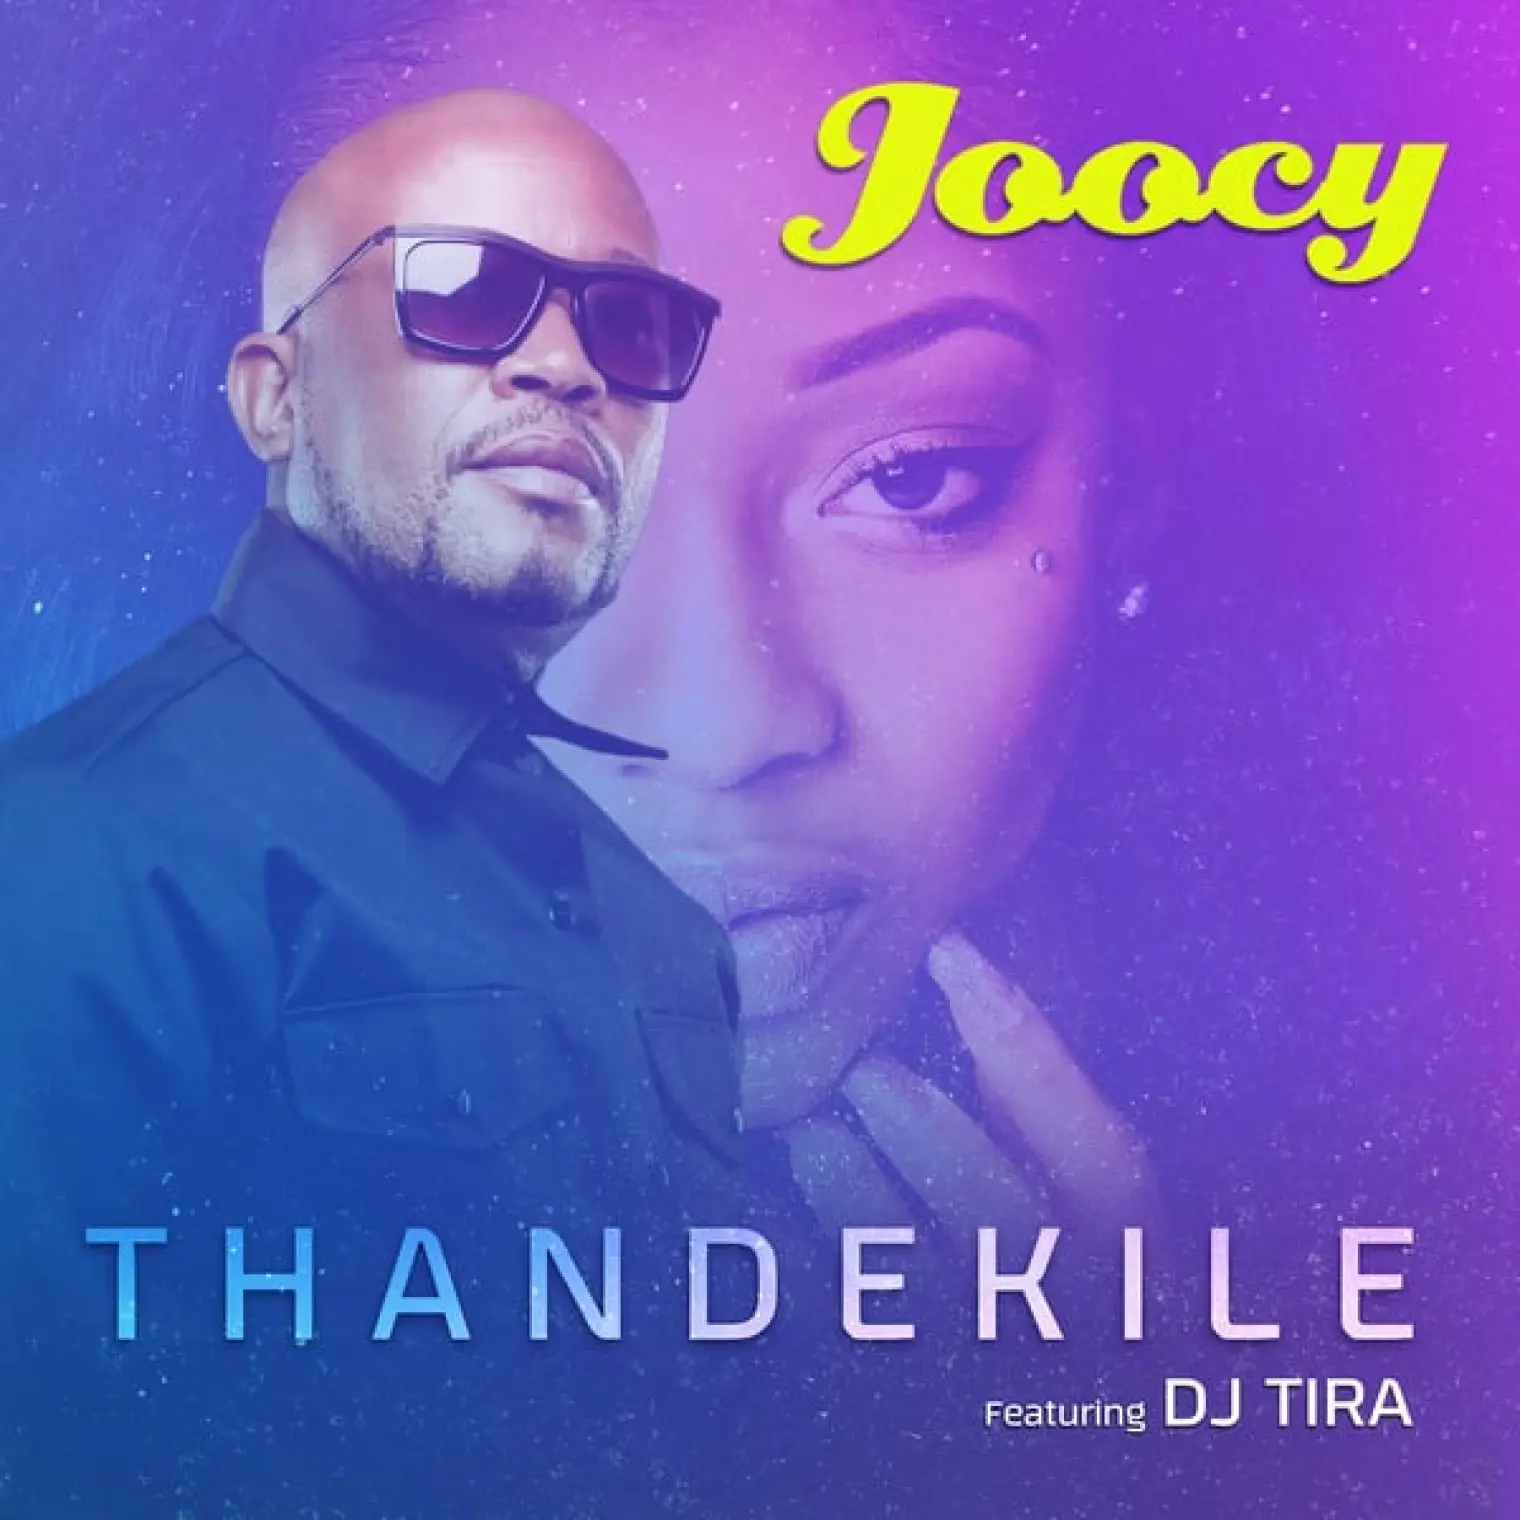 Thandekile Single -  Joocy 